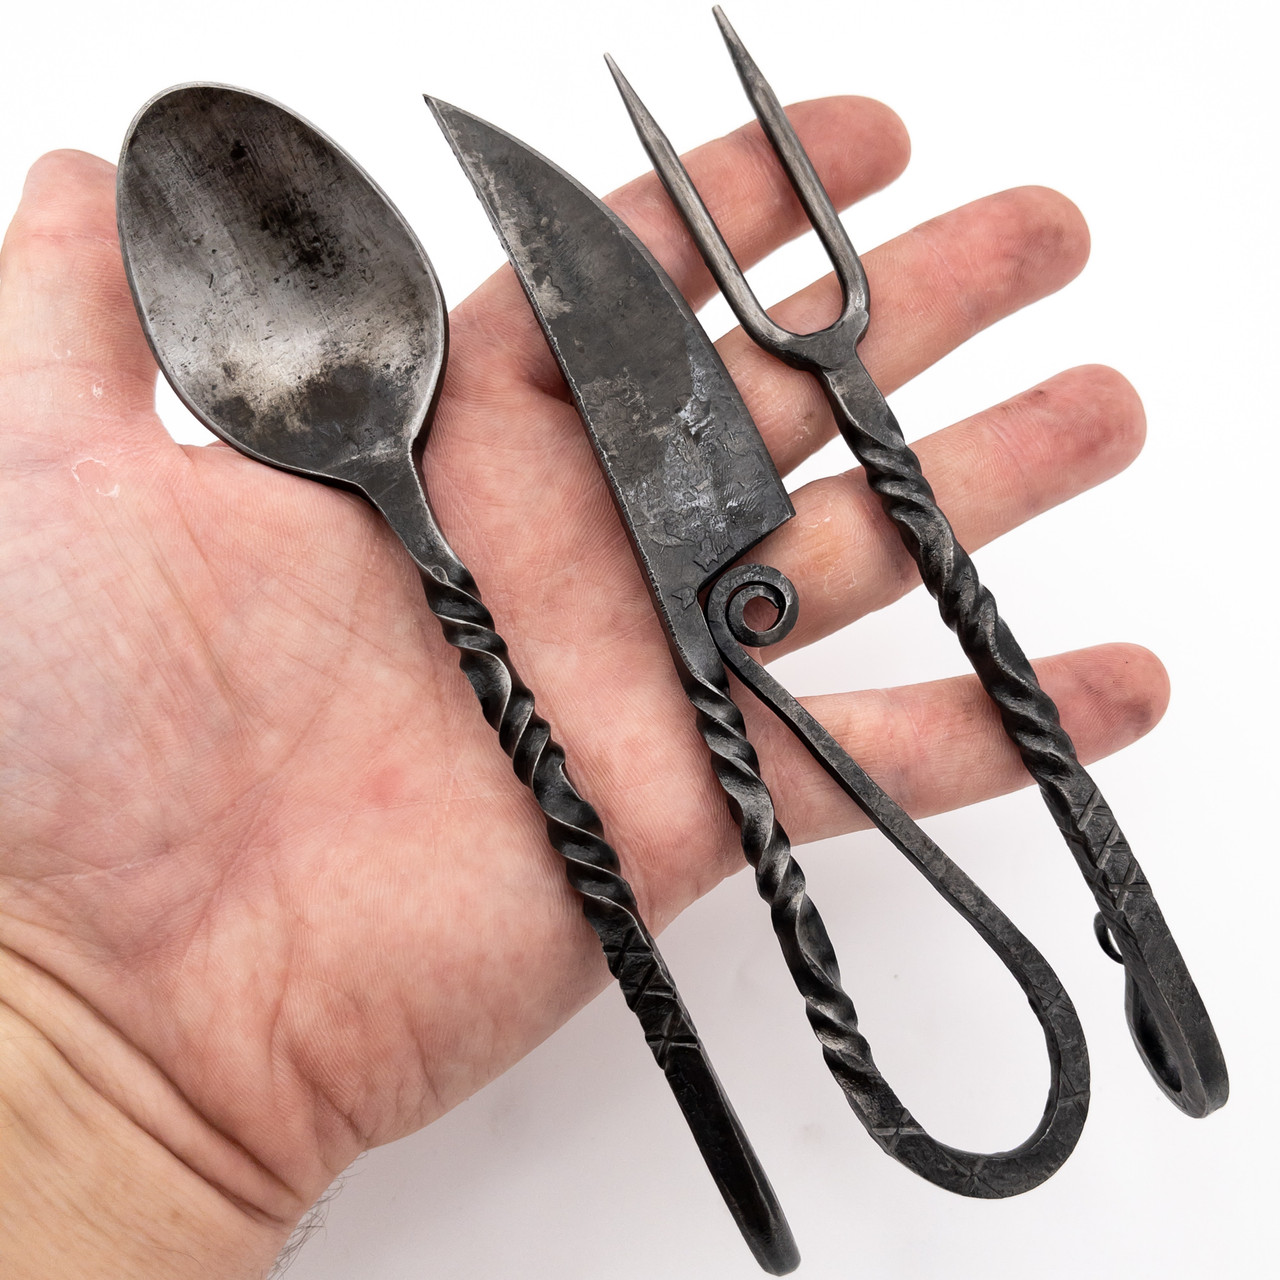 Handmade Medieval Iron One Piece Fork Spoon Knife Utensils